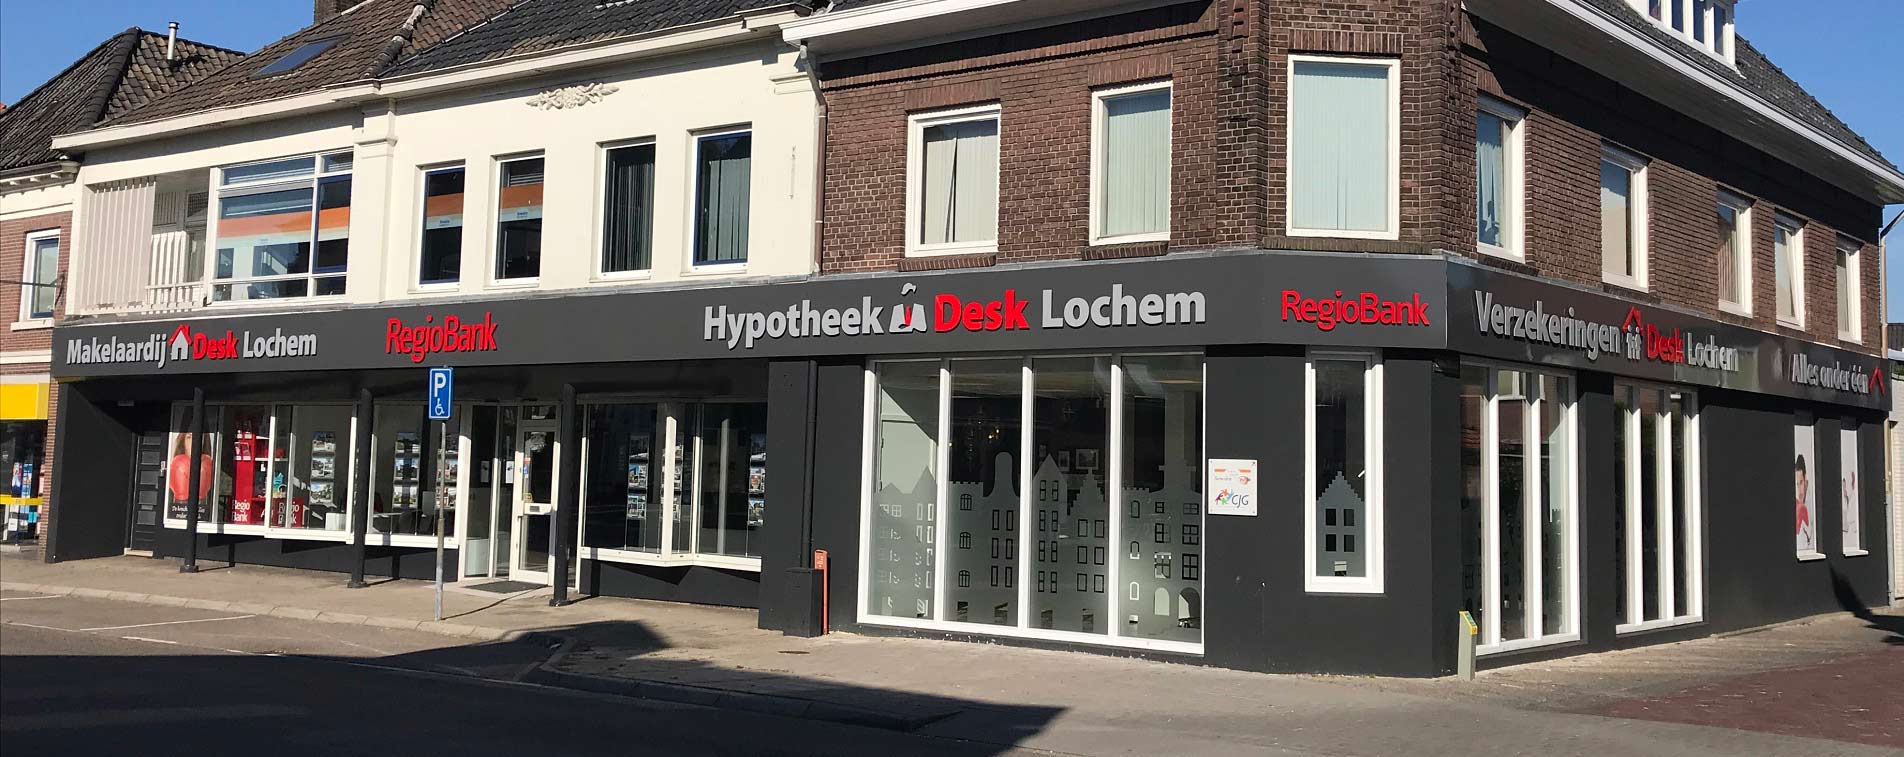 Bedrijfspand van Hypotheekdesk in Lochem